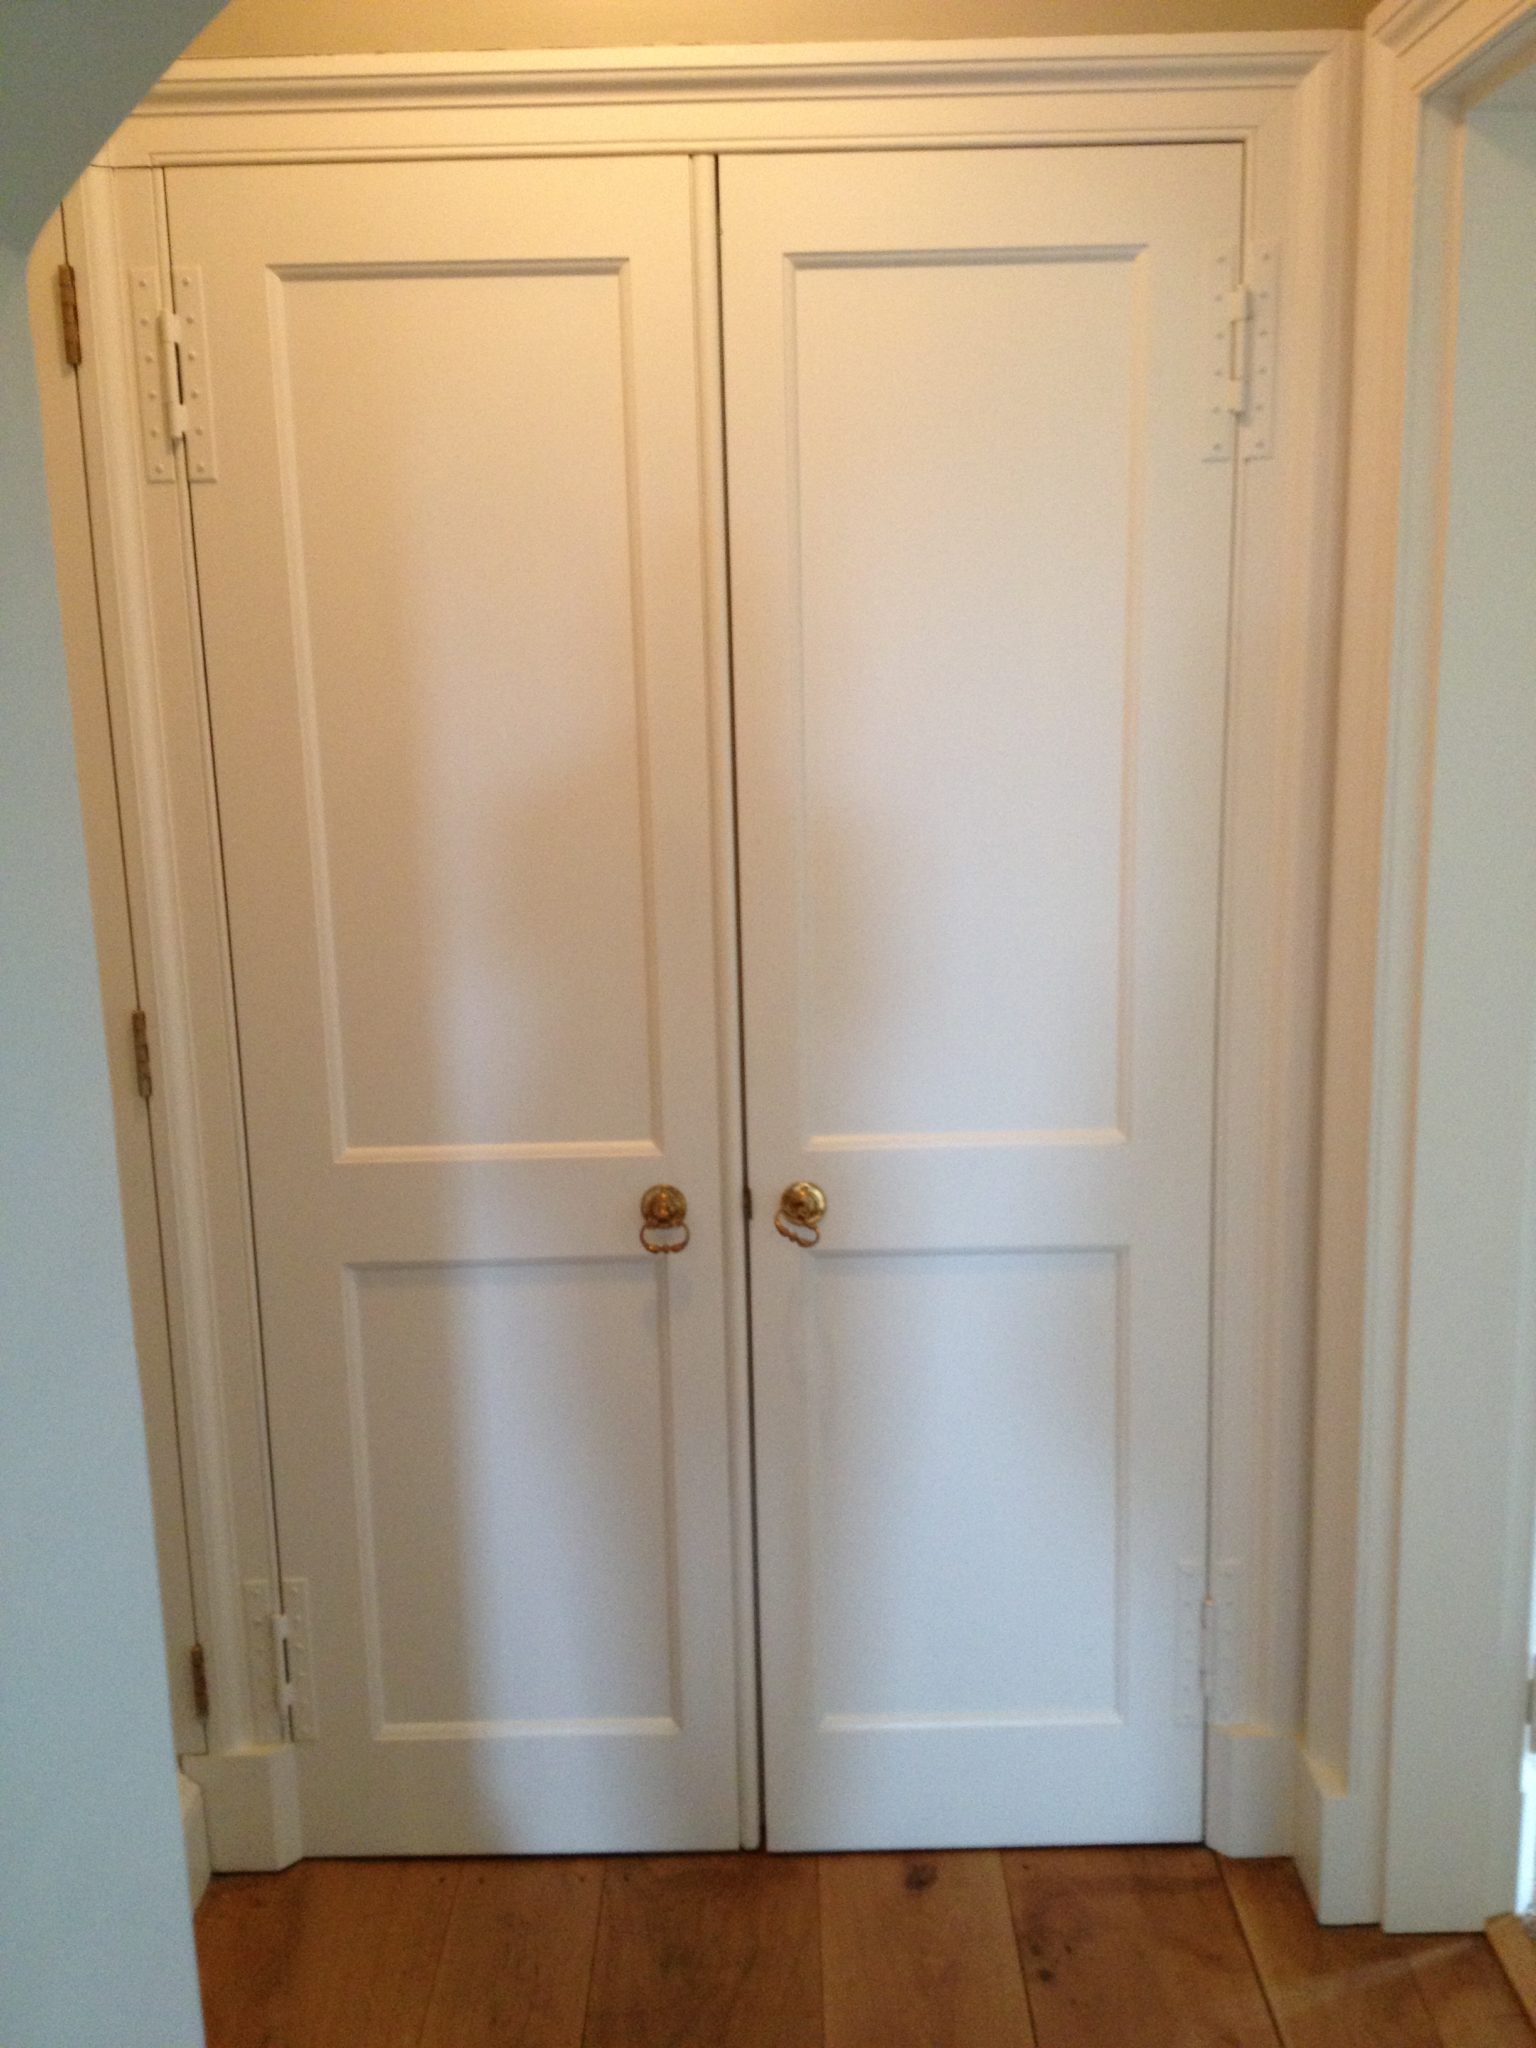 Symmetrical double doors open to reveal a single doorway and a hidden cupboard